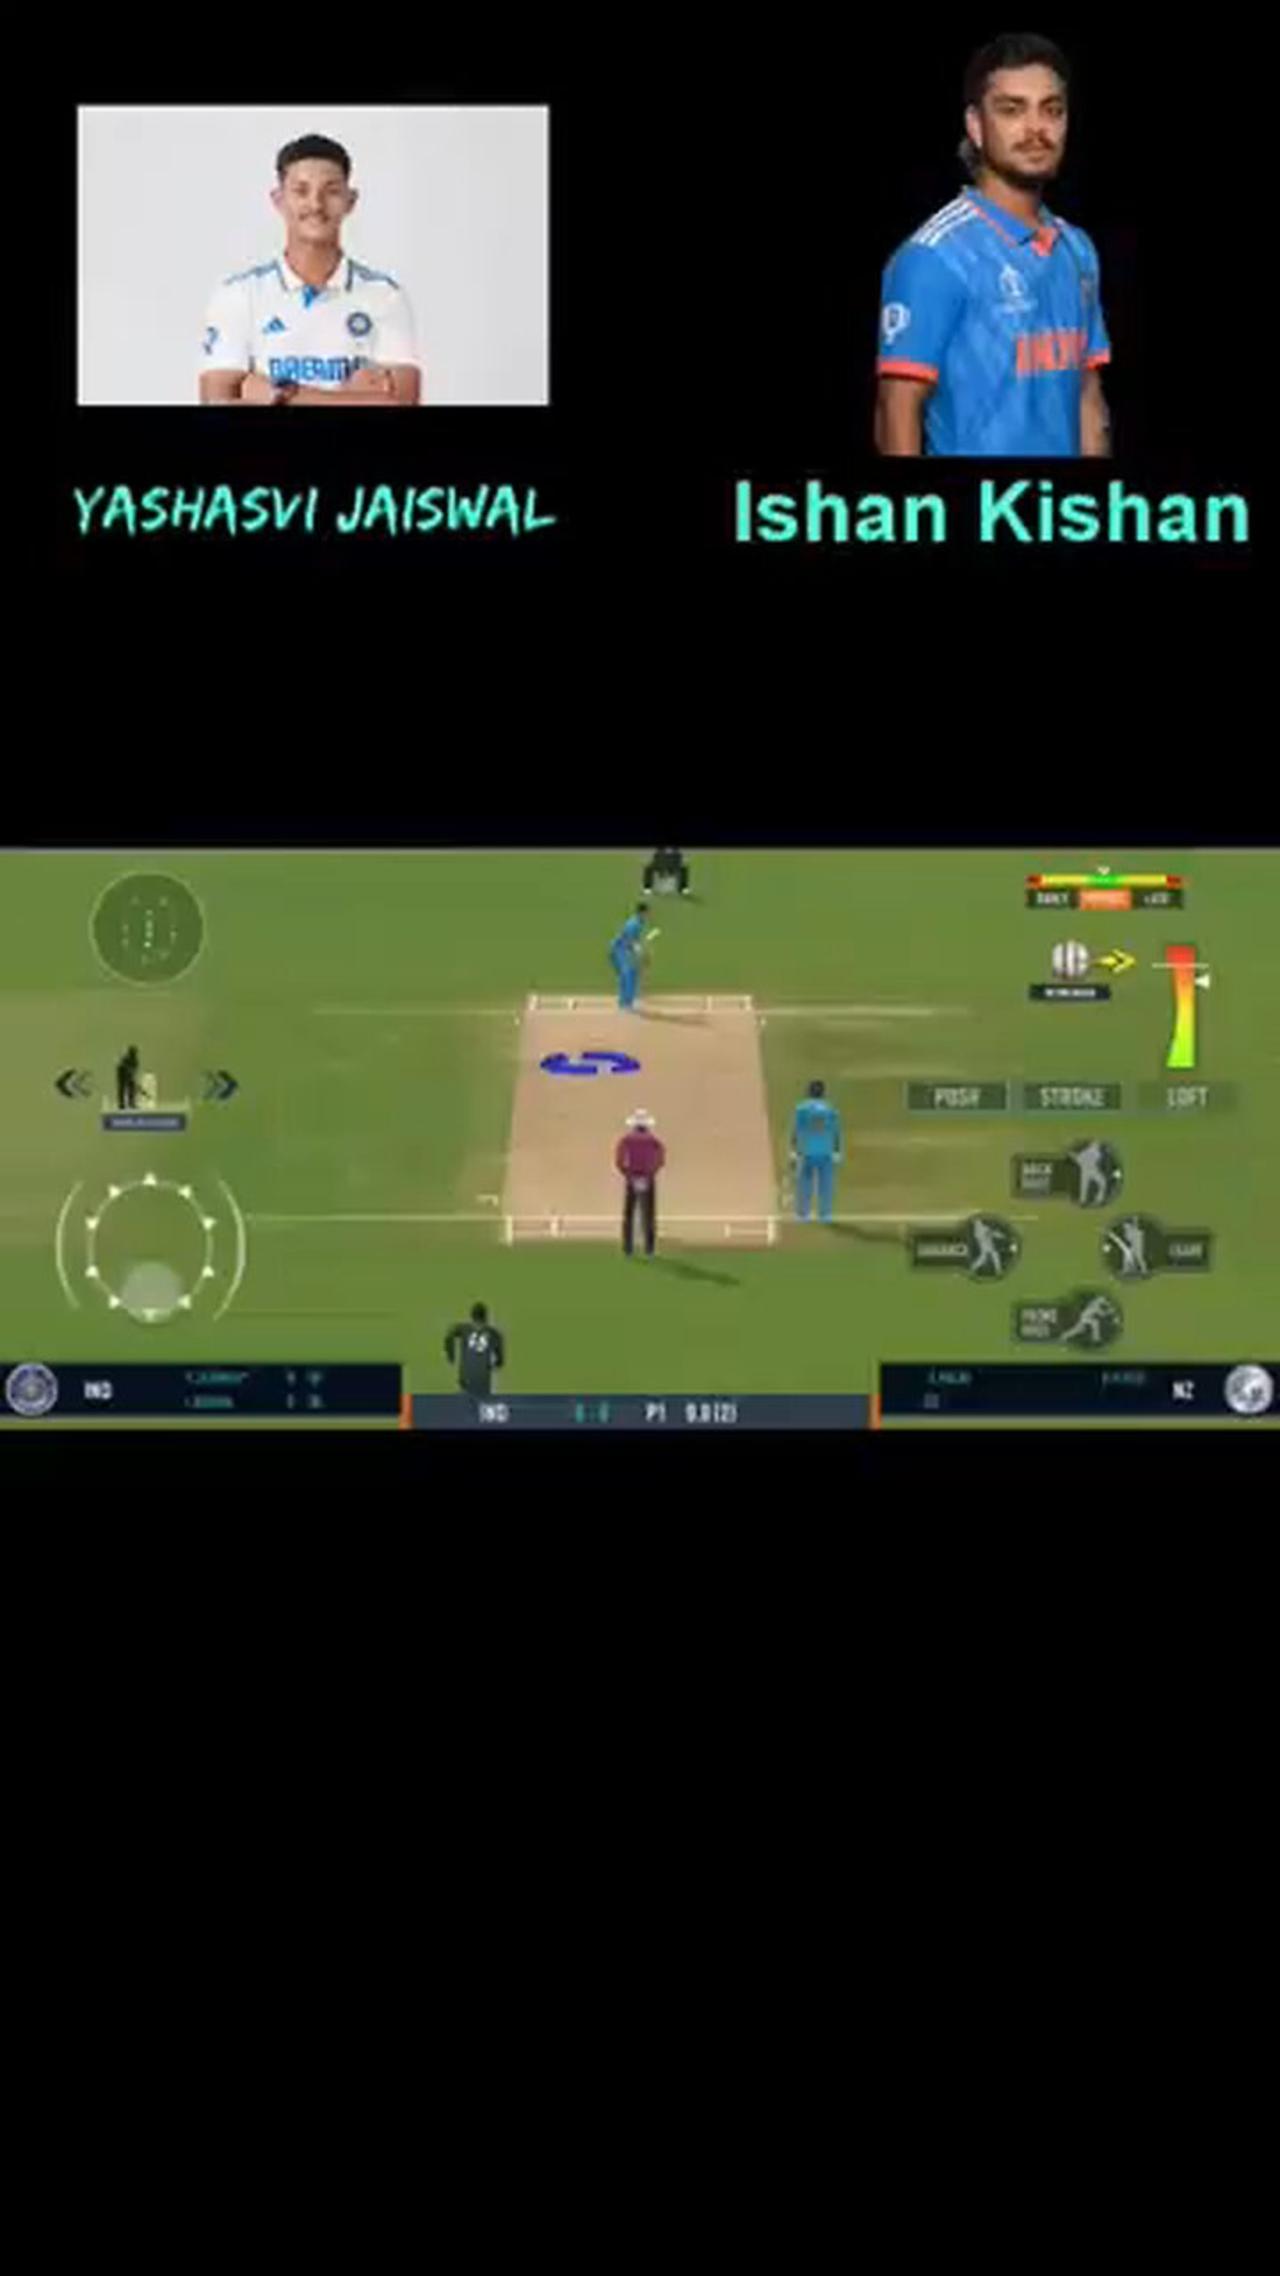 Y.jaishwal vs Ishan Kishan #cricket